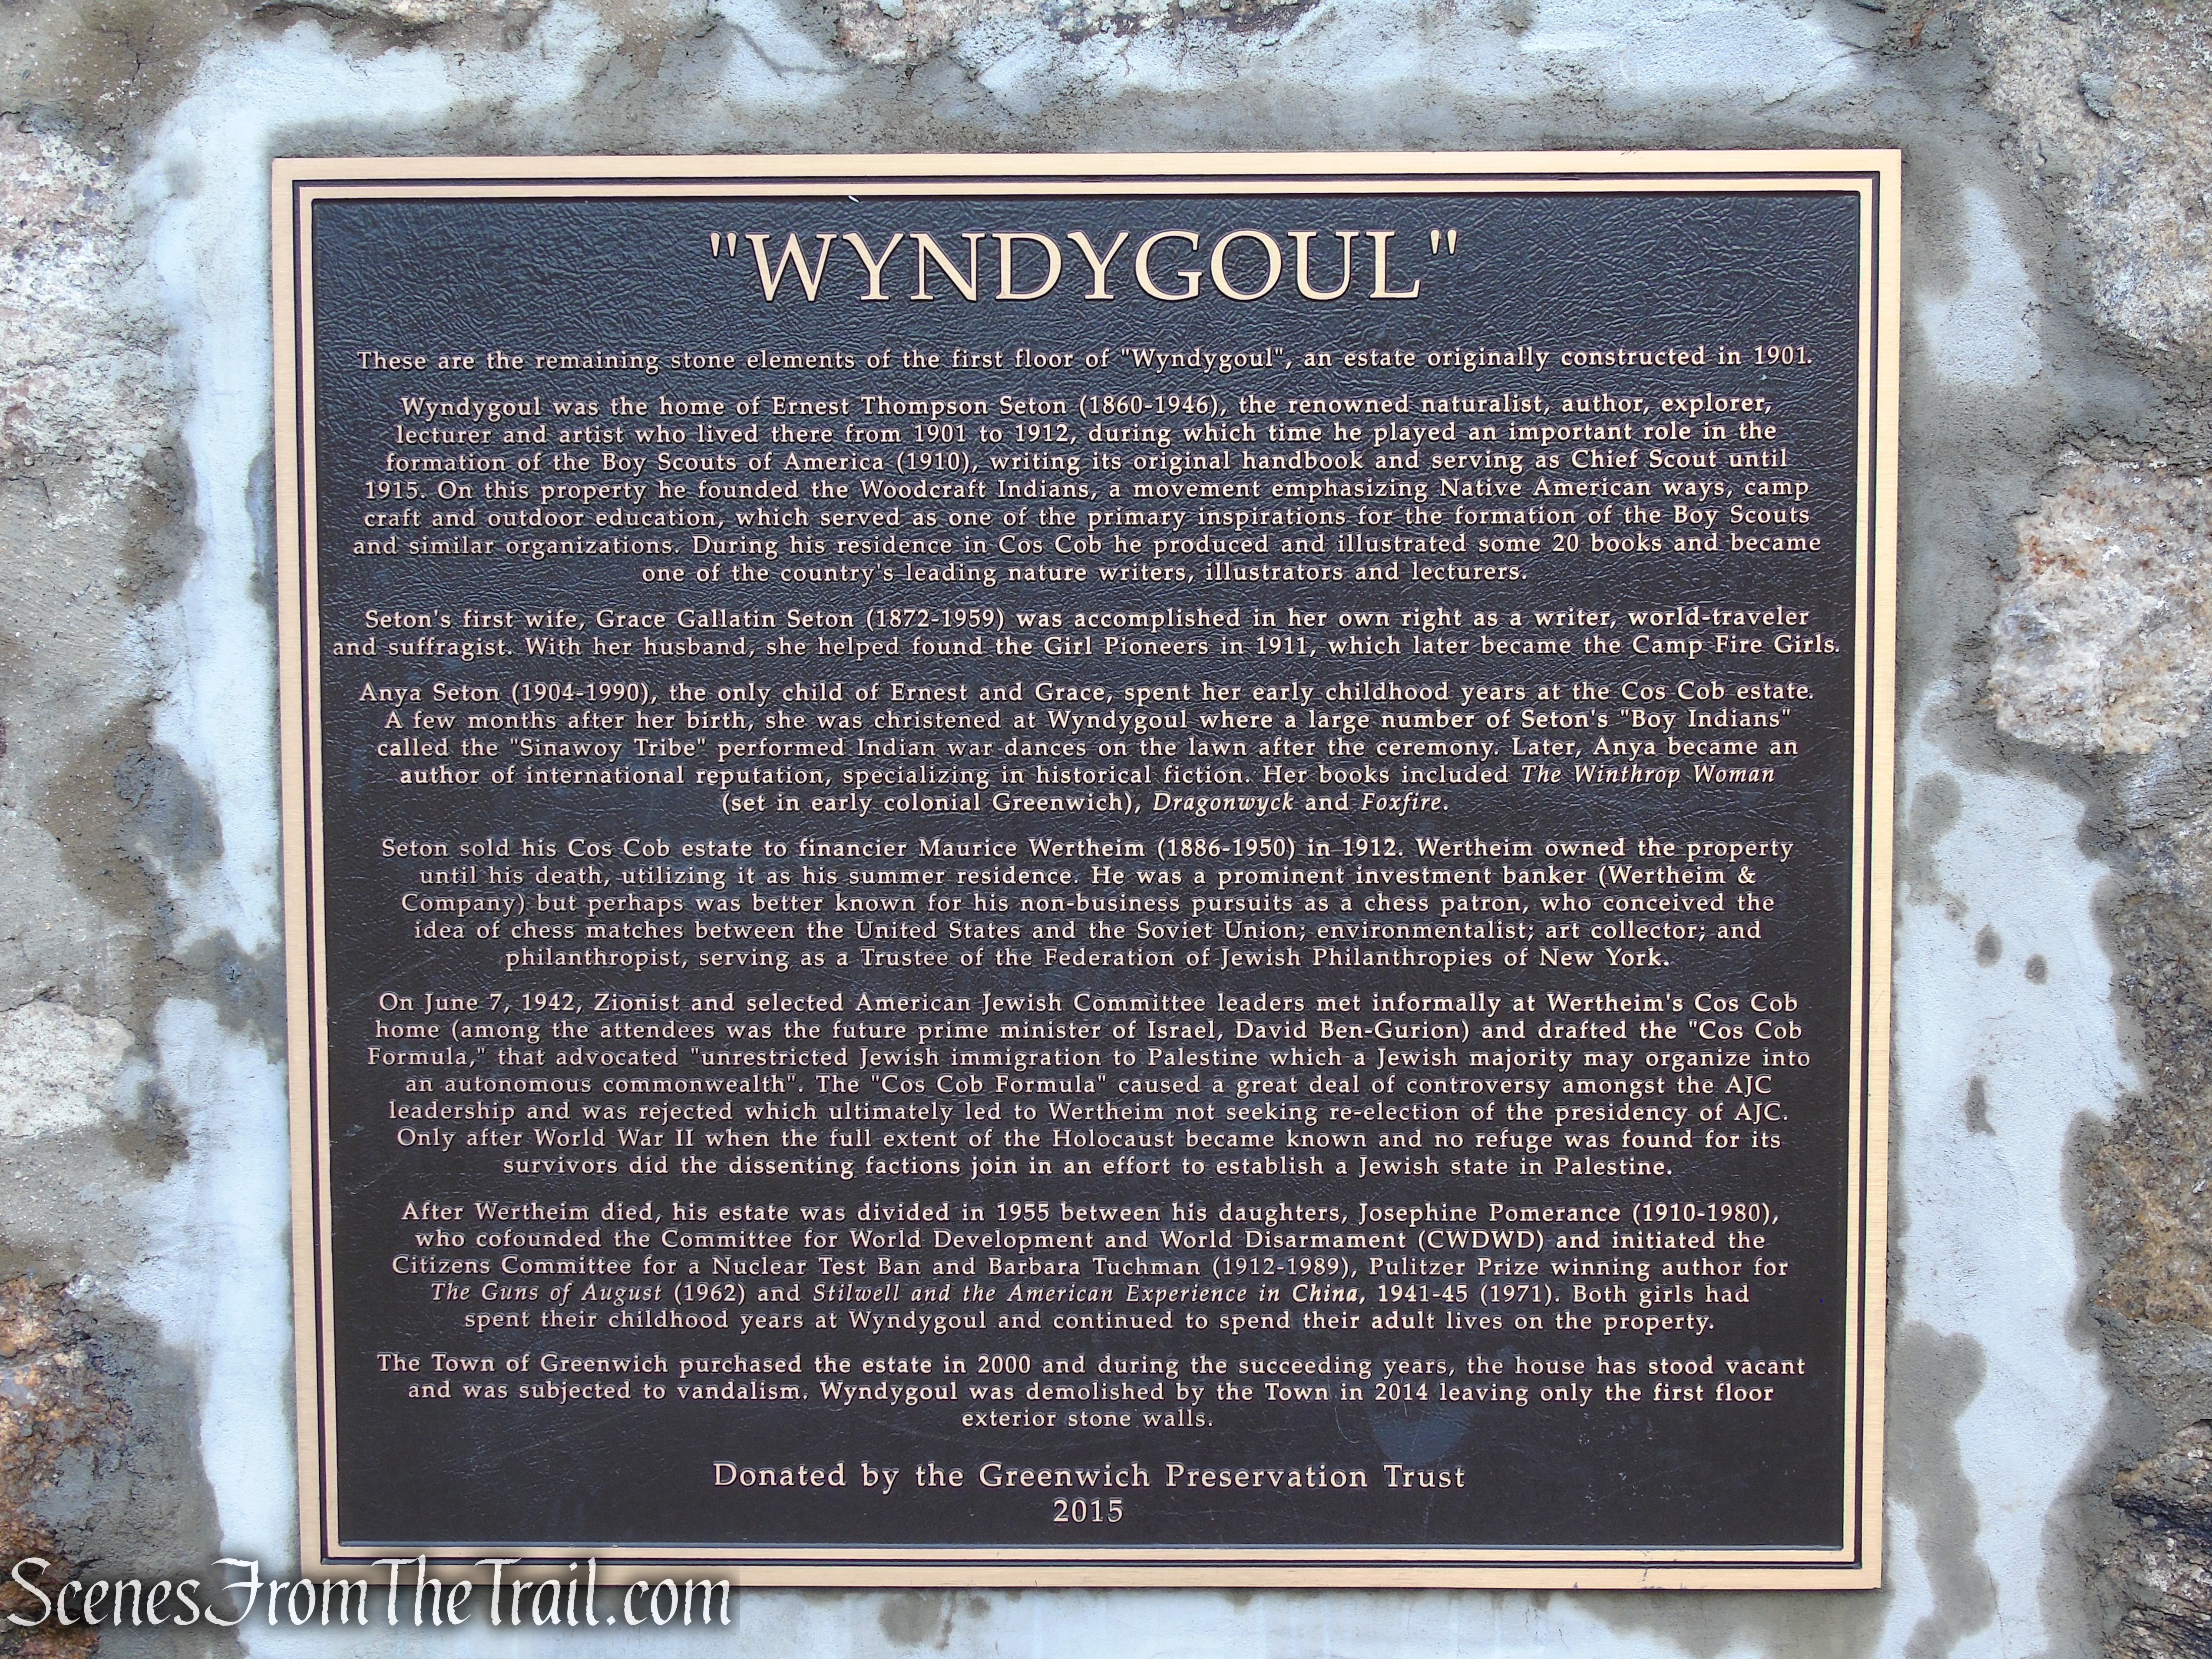 Wyndygoul ruins - Pomerance Park